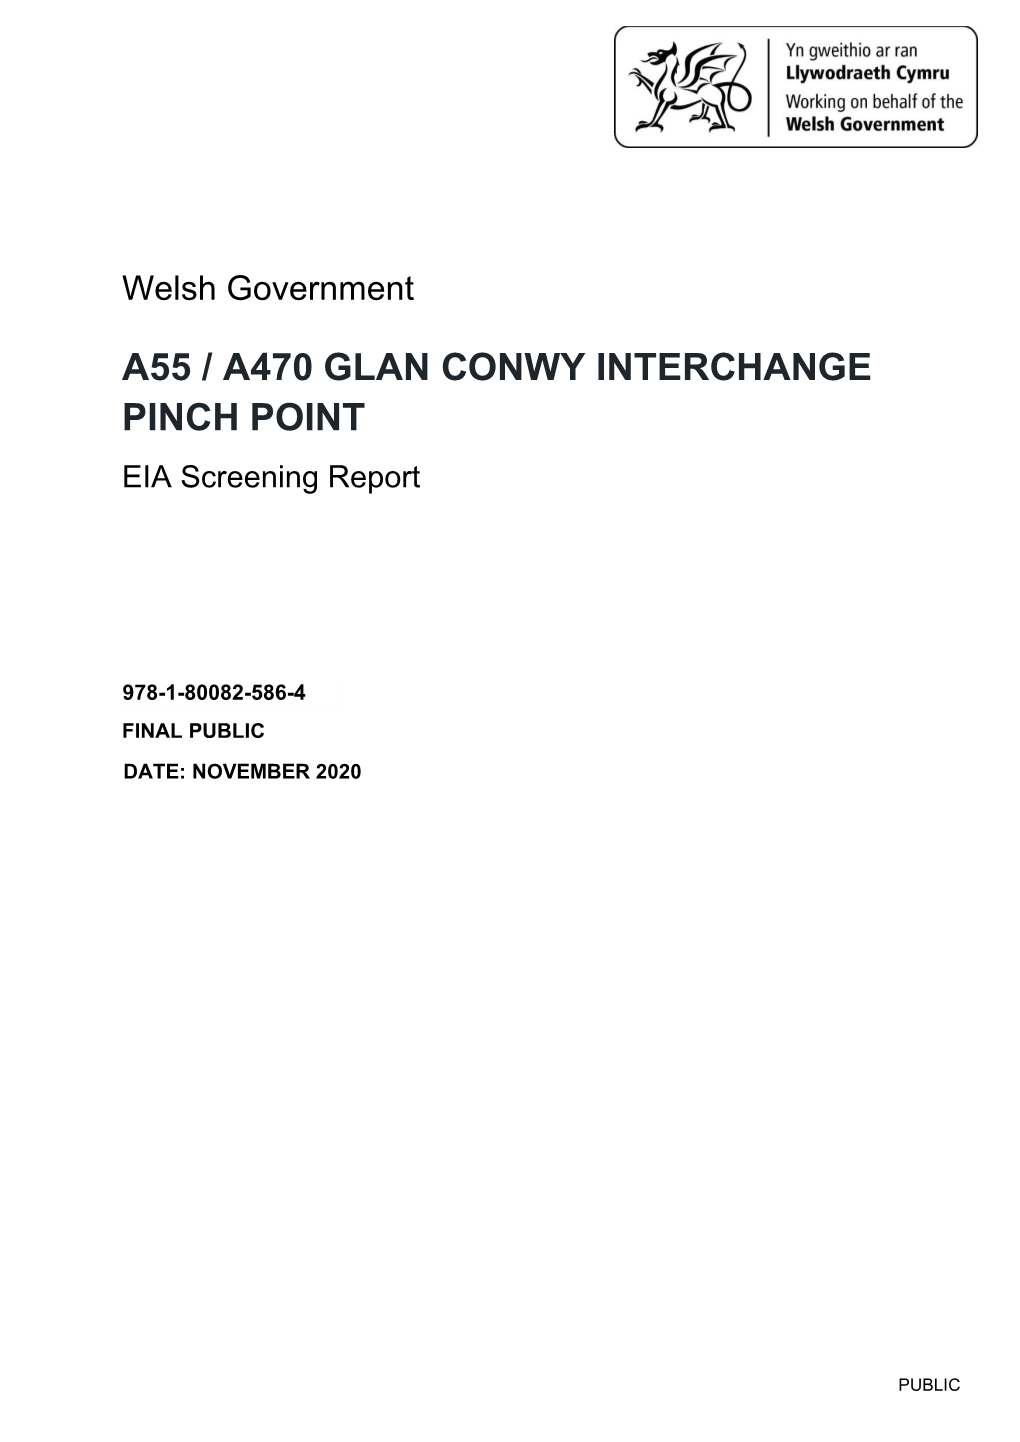 A55/A470 Glan Conwy Interchange Pinch Point: Environmental Impact